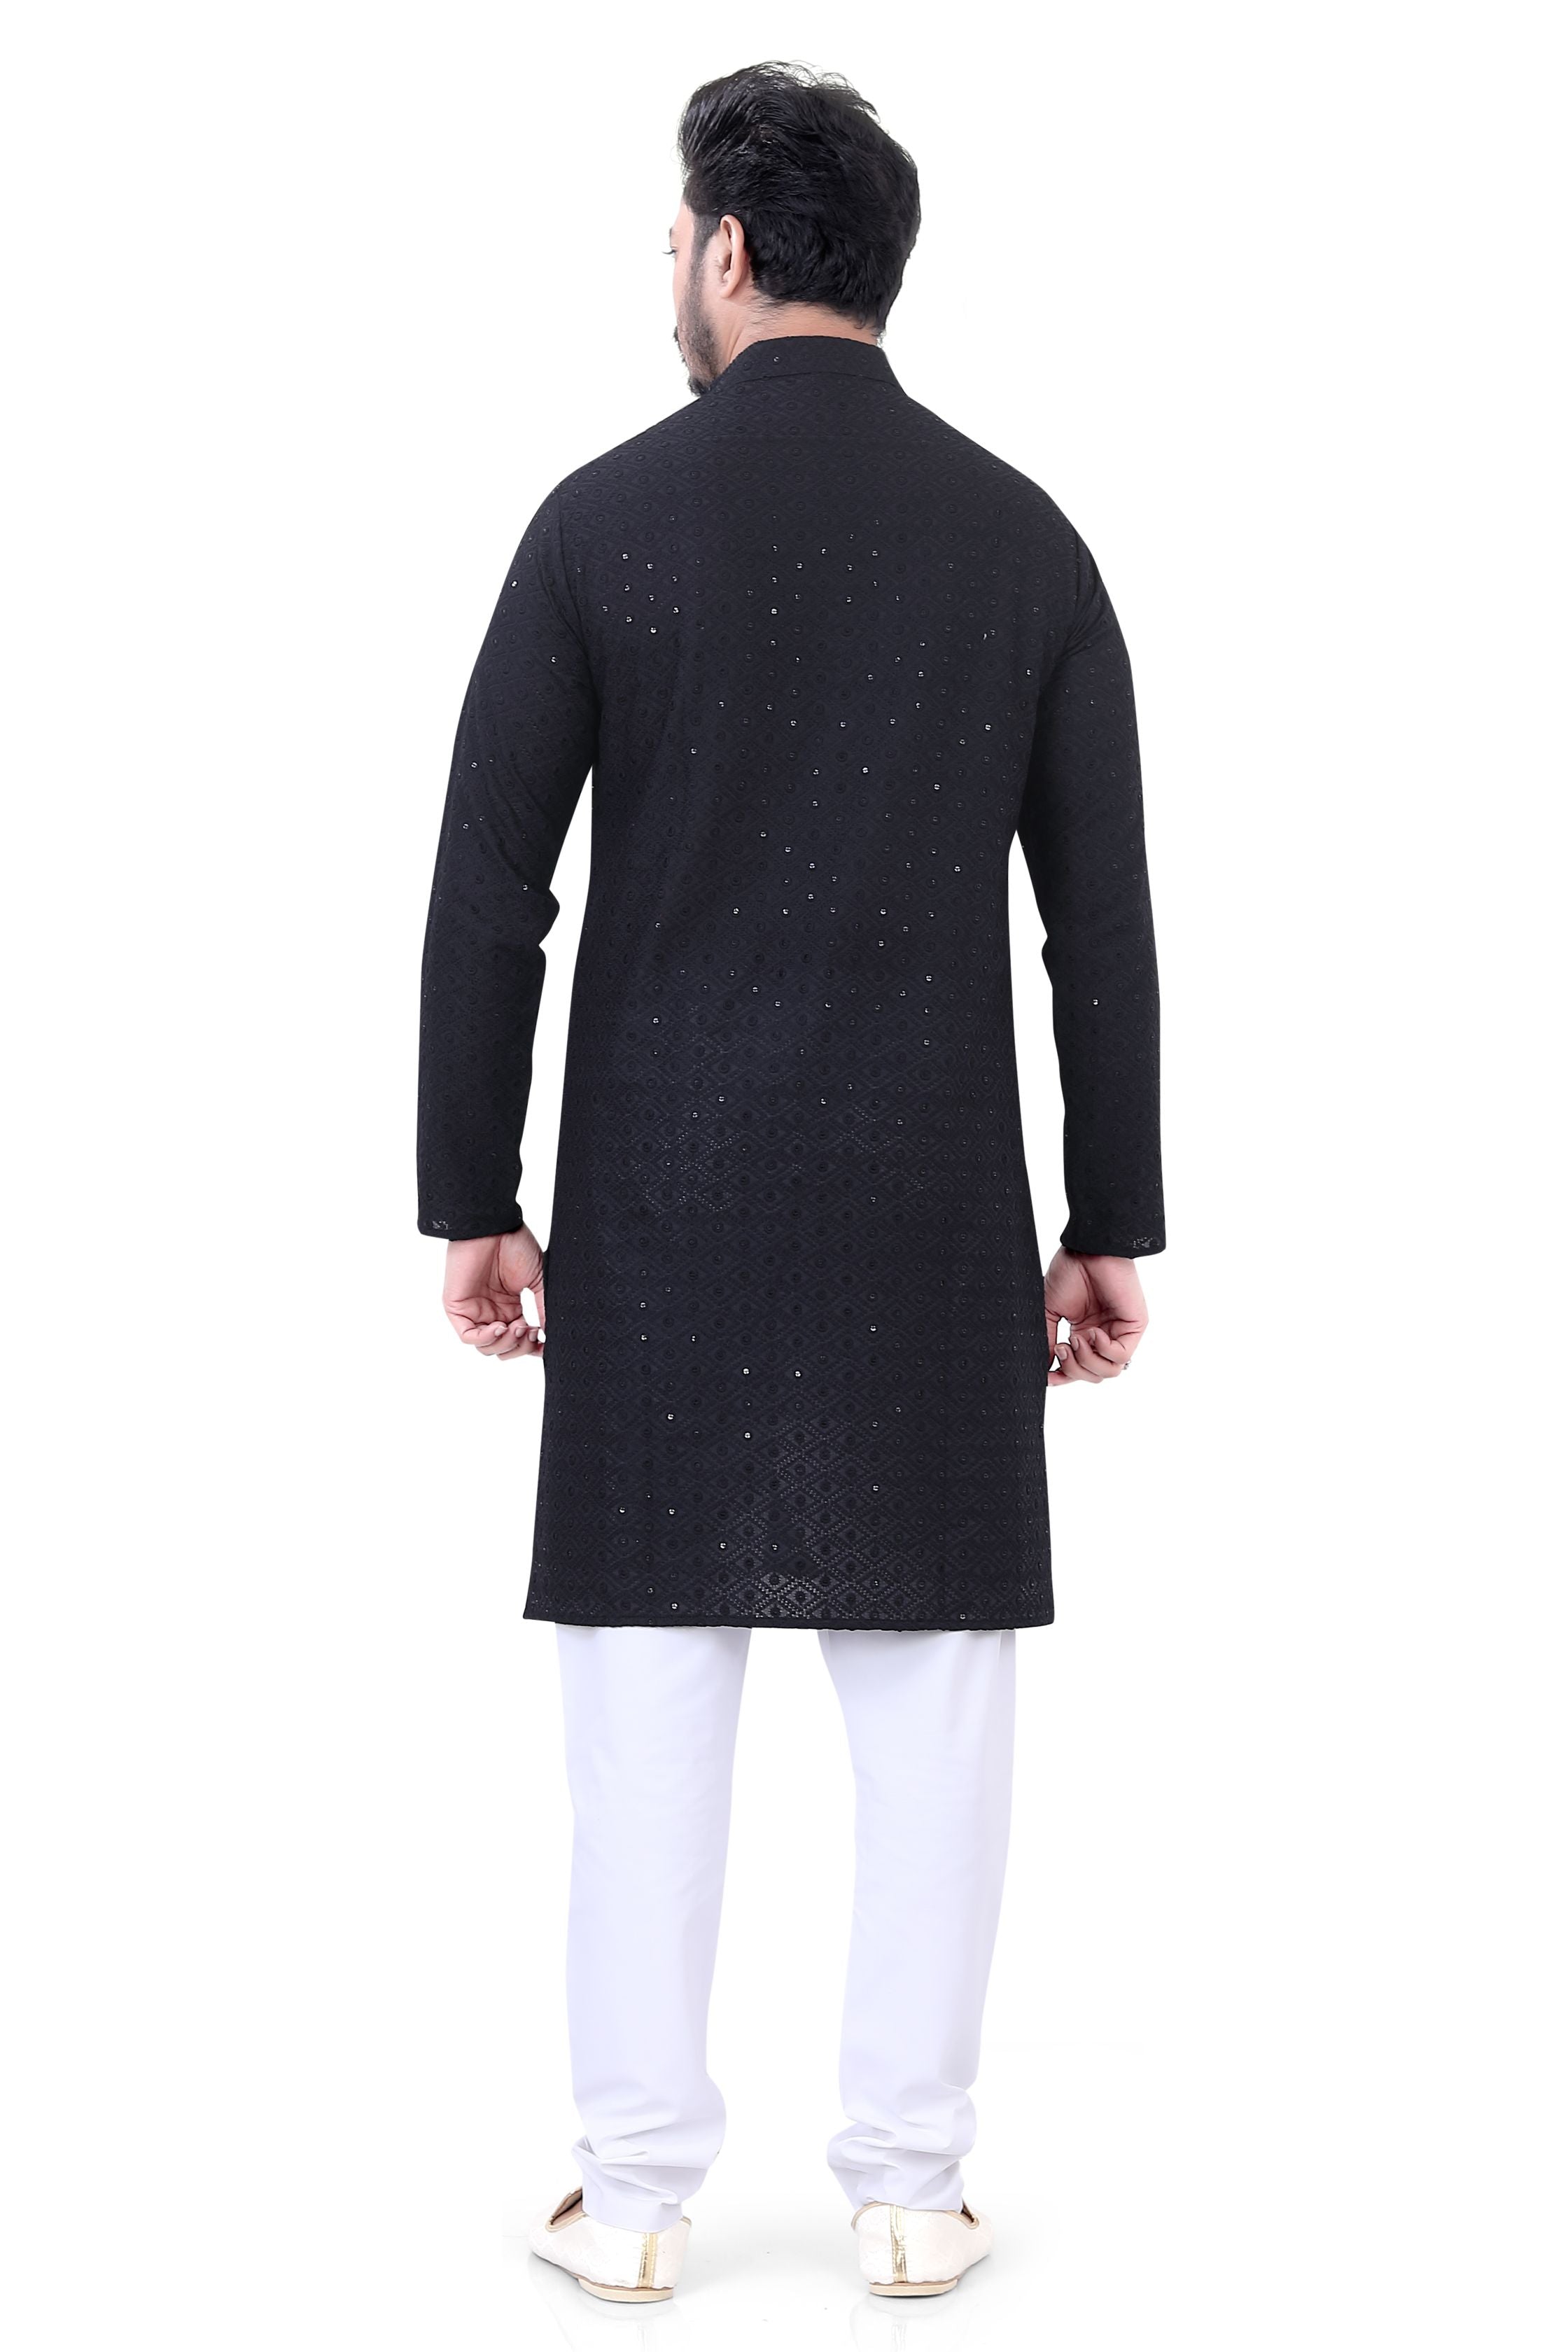 Lucknowi Cotton Kurta Pajama Set in Black